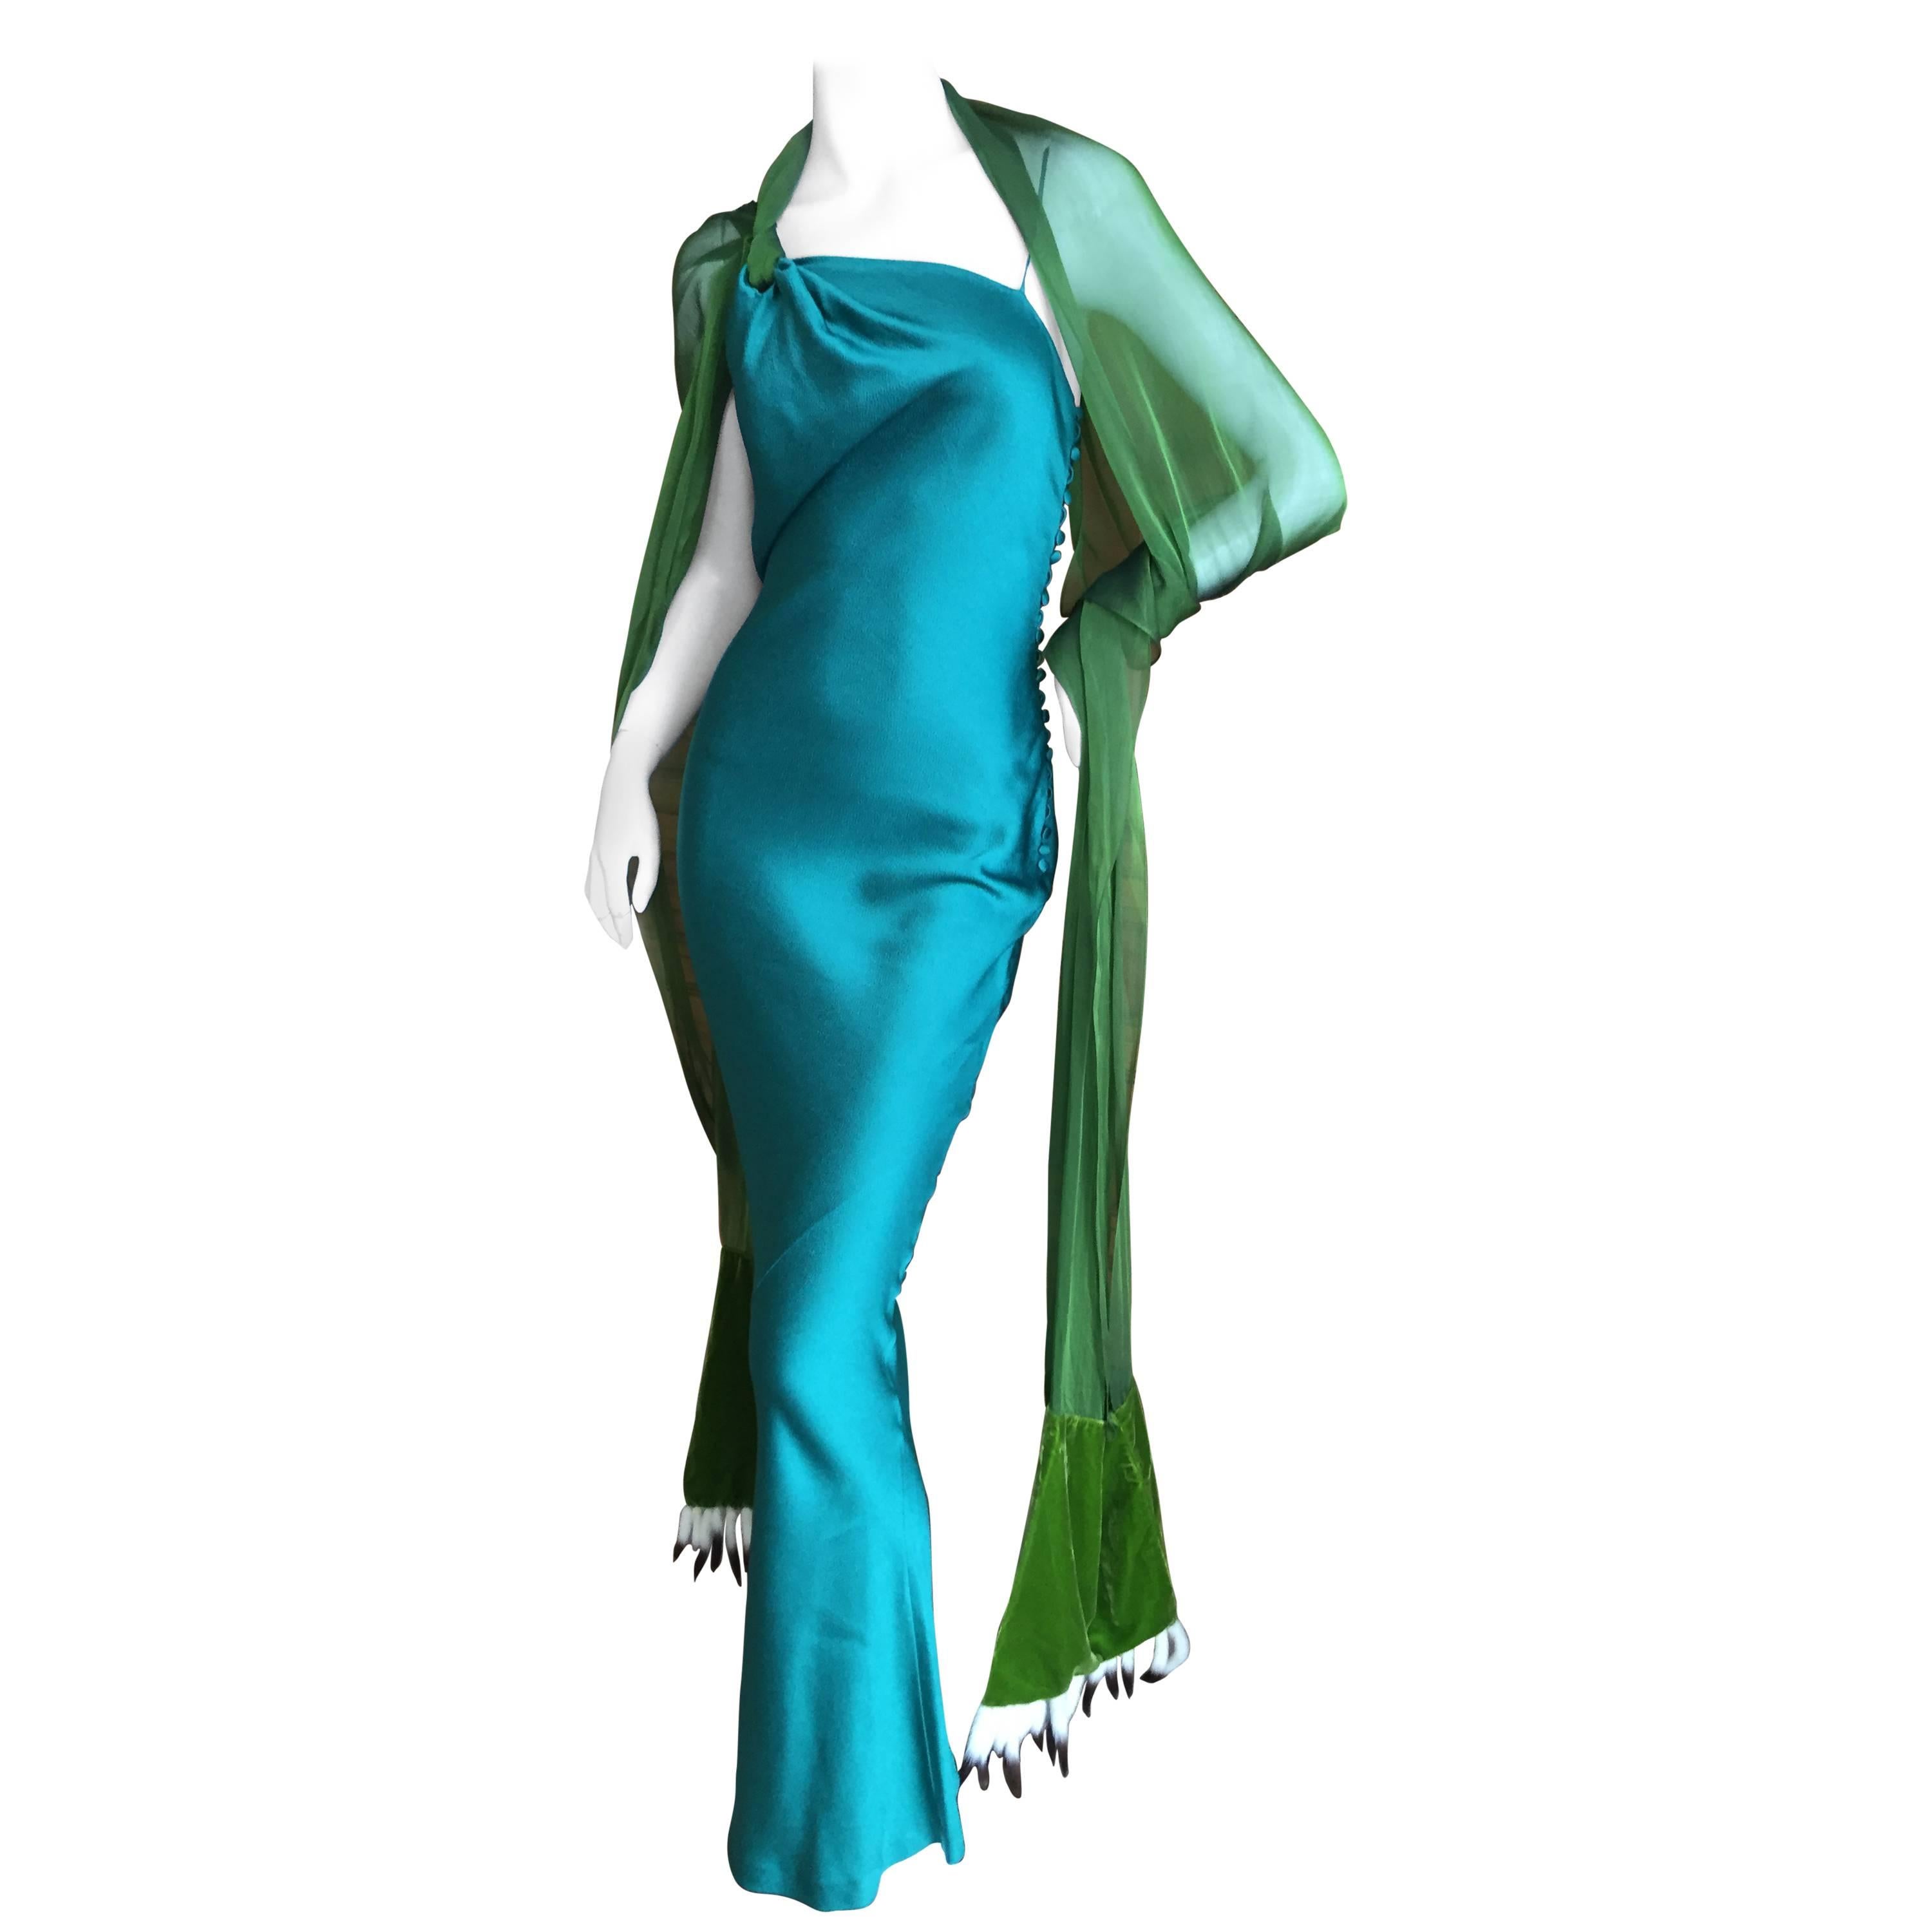 Christian Dior by Galliano Bias Cut Green Dress w Ermine Tail Trim Scarves 1990s